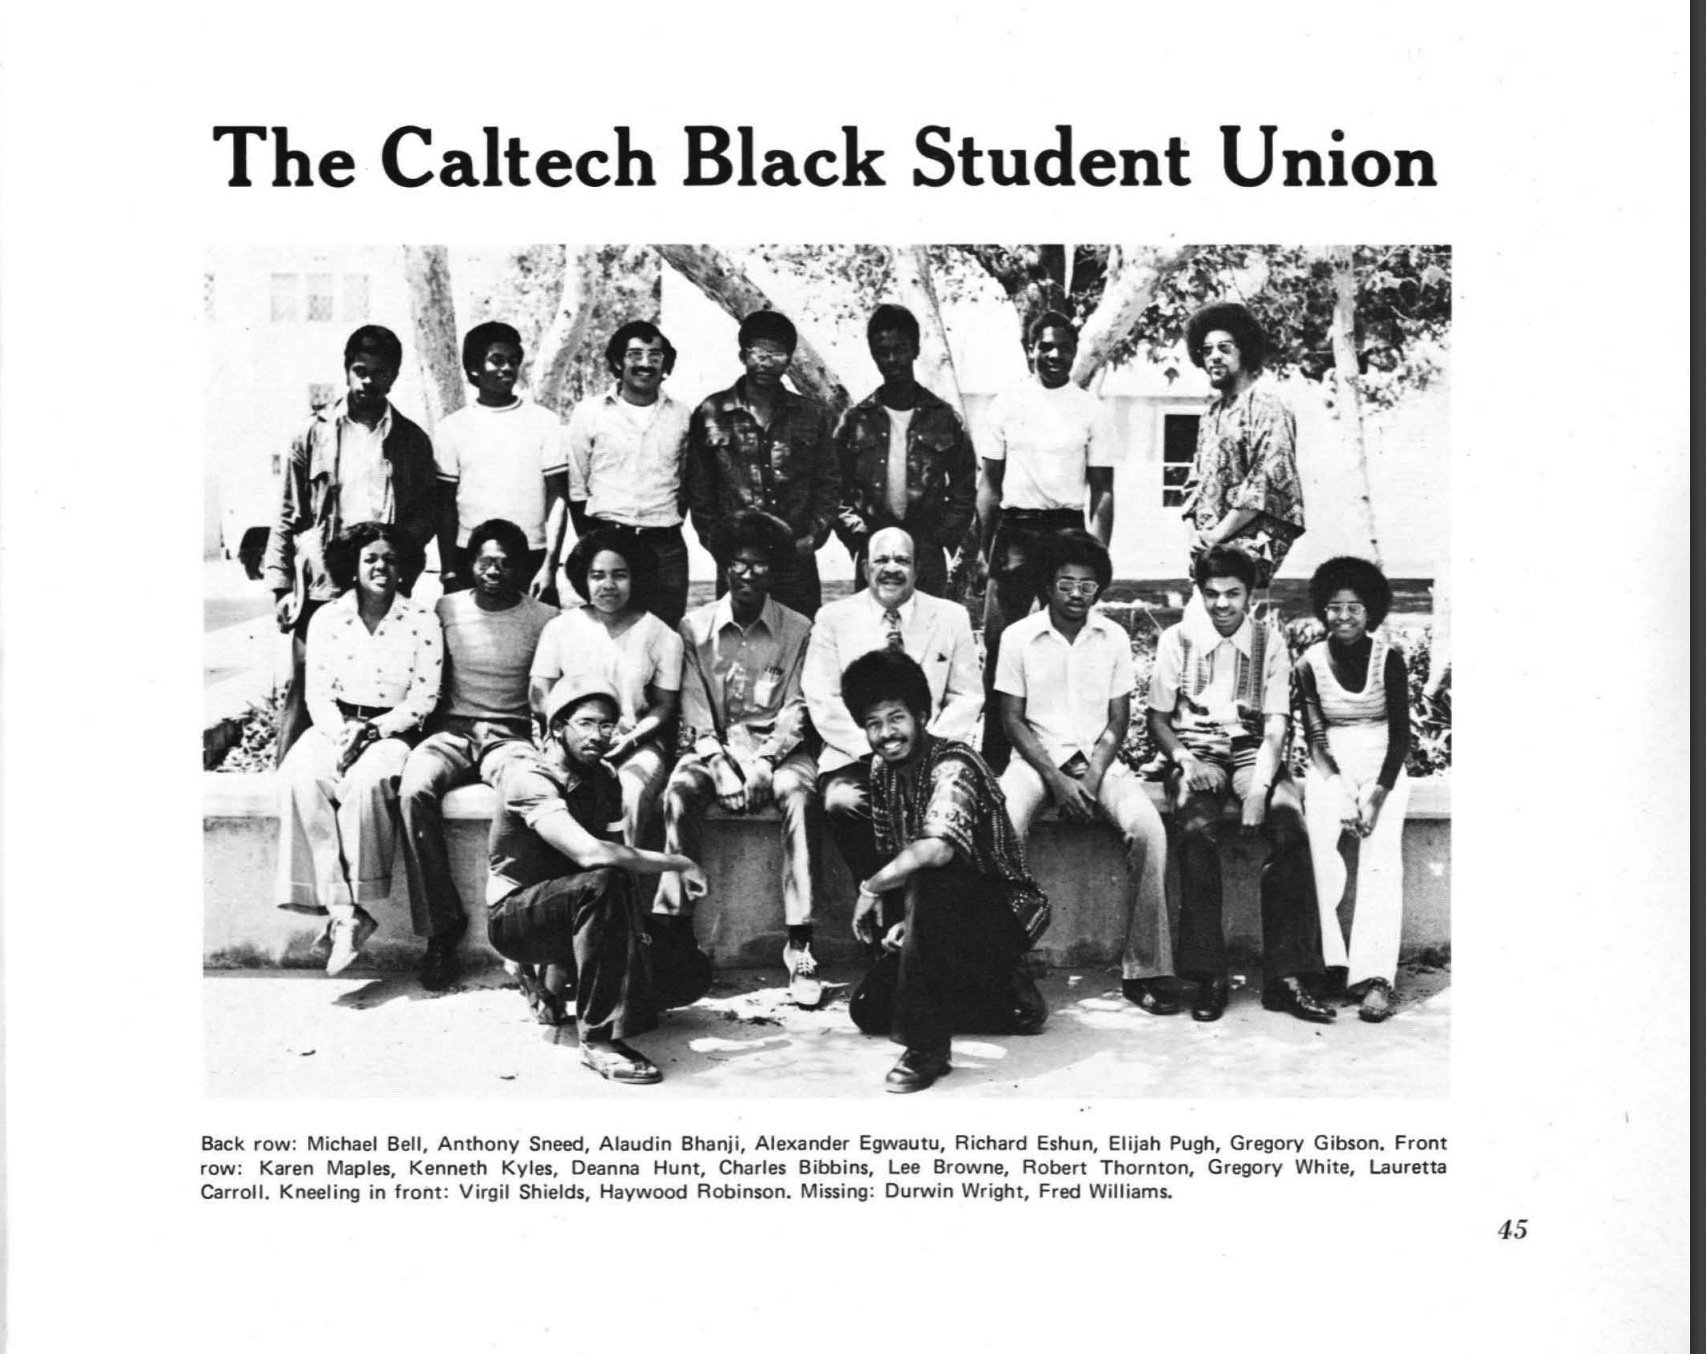 The Caltech Black Student Union